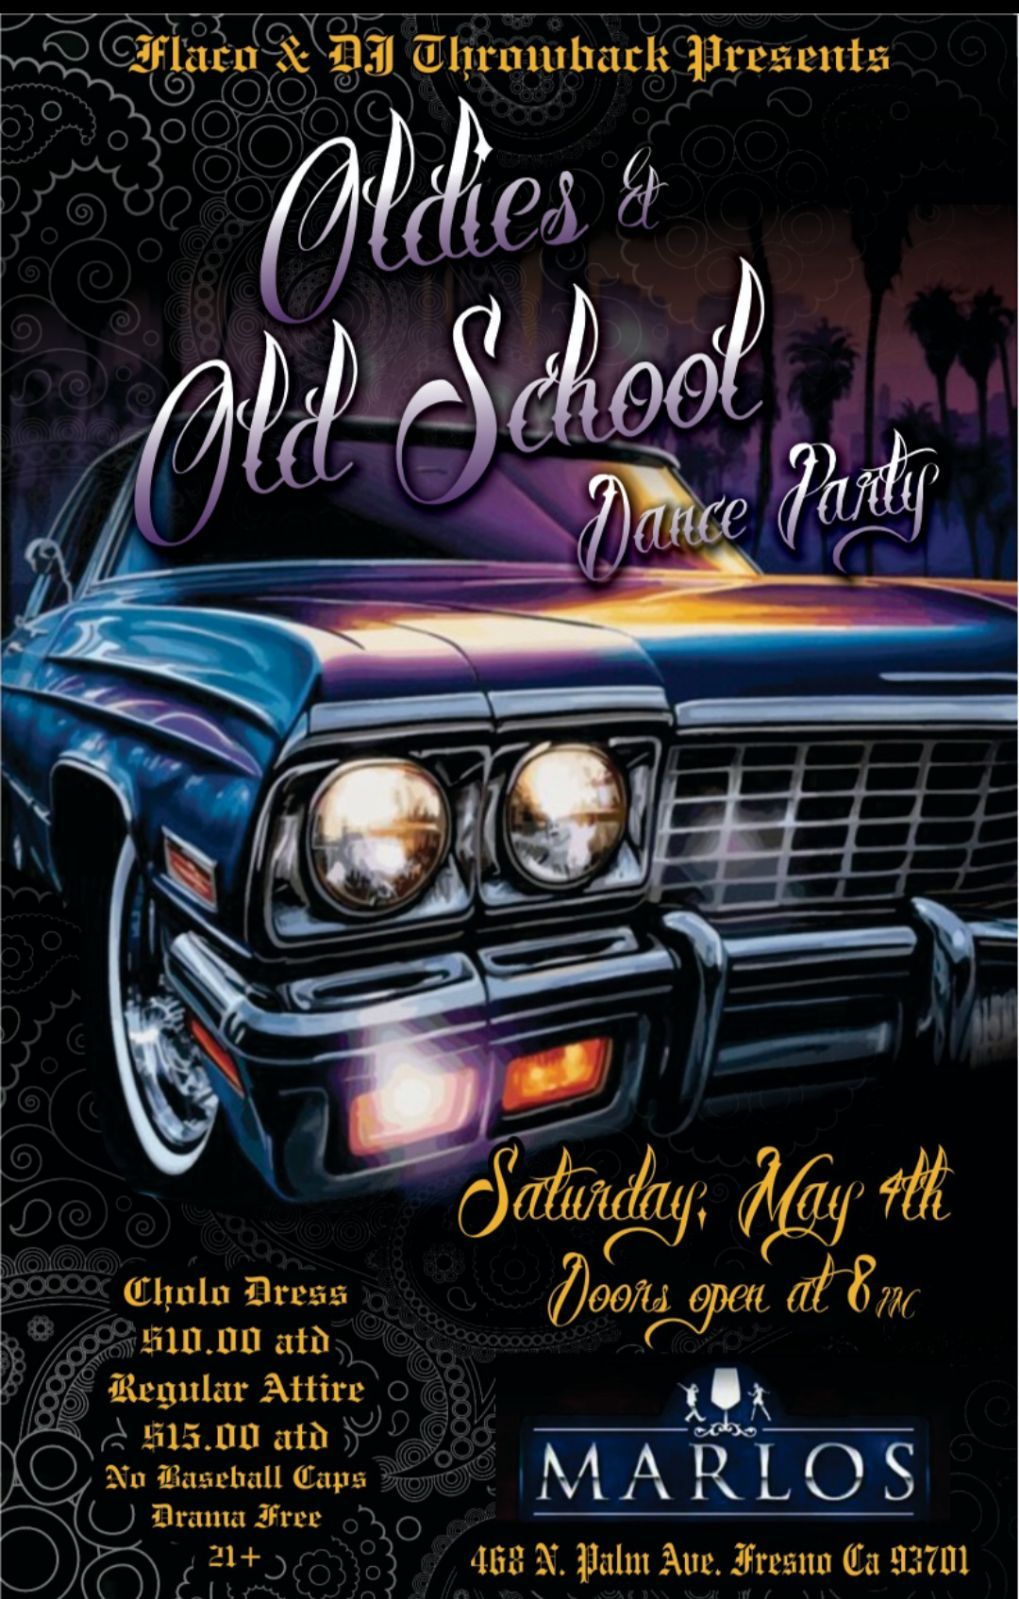 Oldies & Old School Dance Party - DJ Throwback